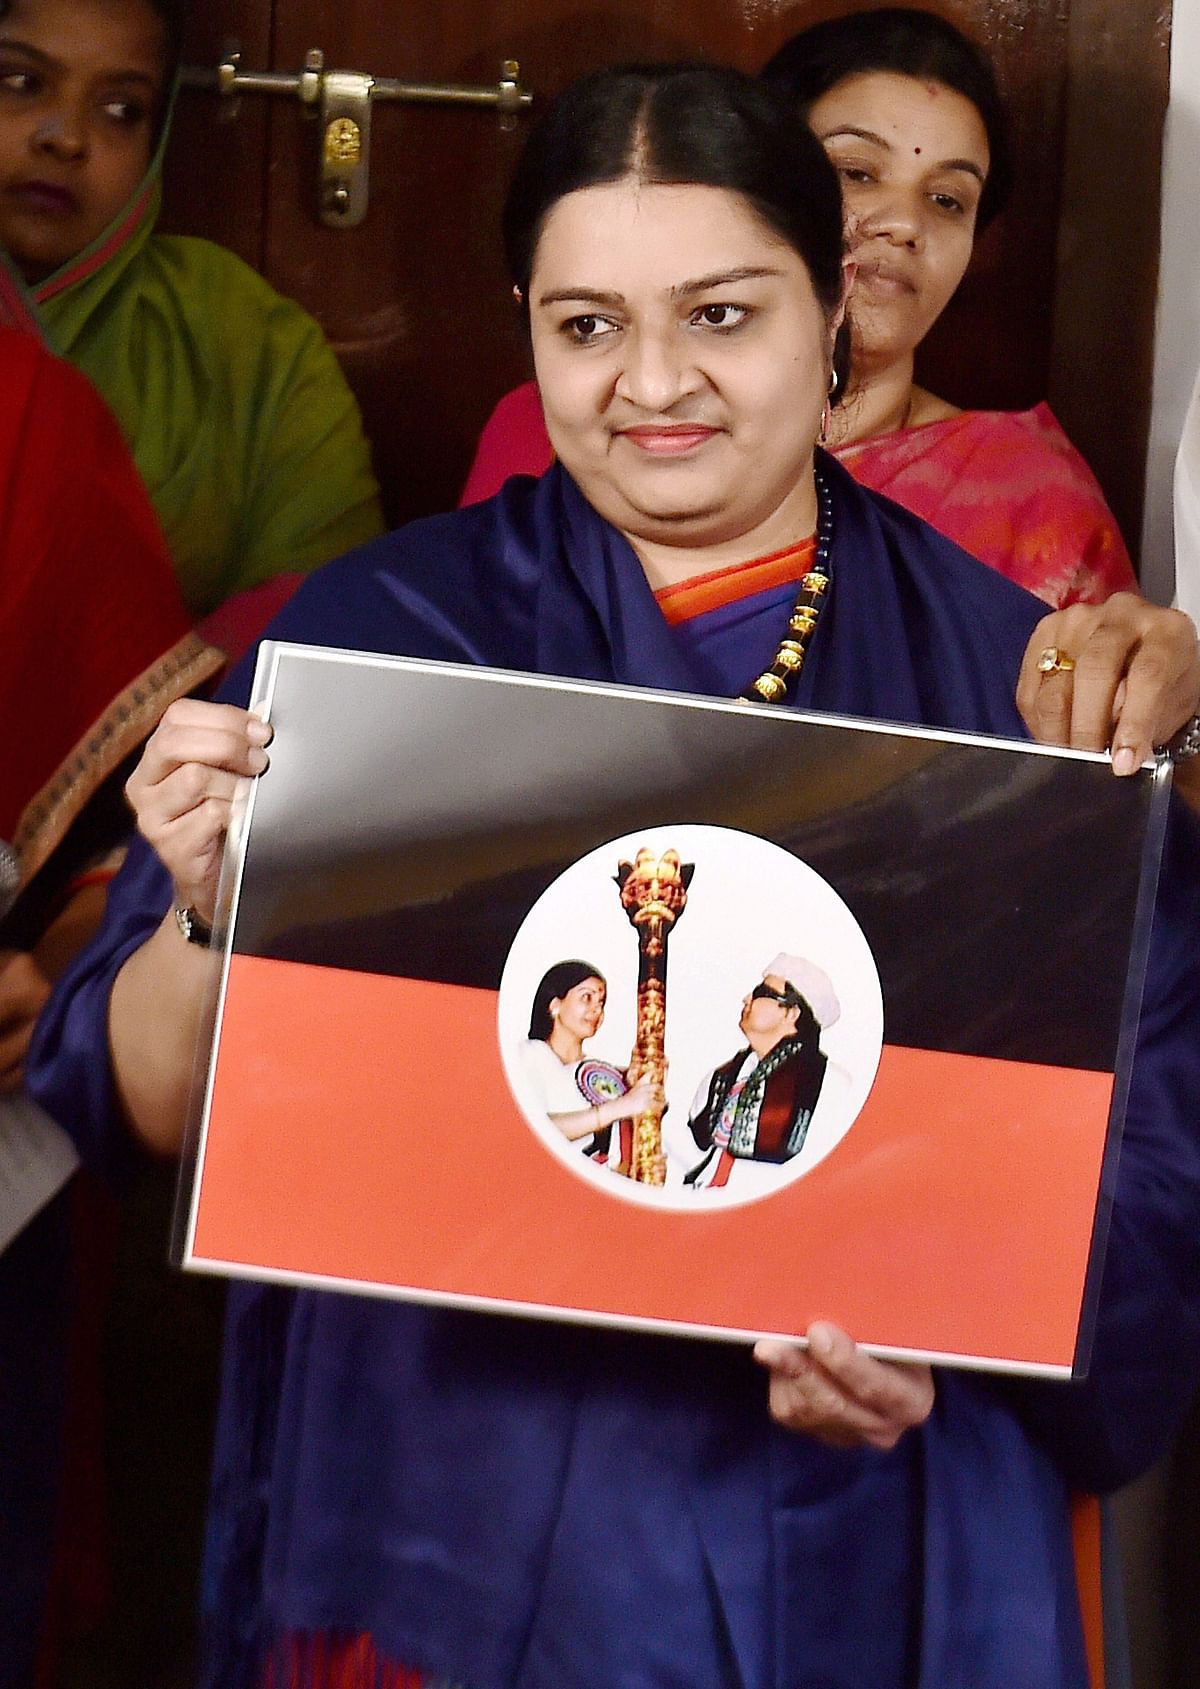 दीपा ने बनाई ‘एमजीआर अम्मा दीपा पेरावई’ पार्टी, लोकल बॉडी इलेक्शन में उतारेंगी उम्मीदवार